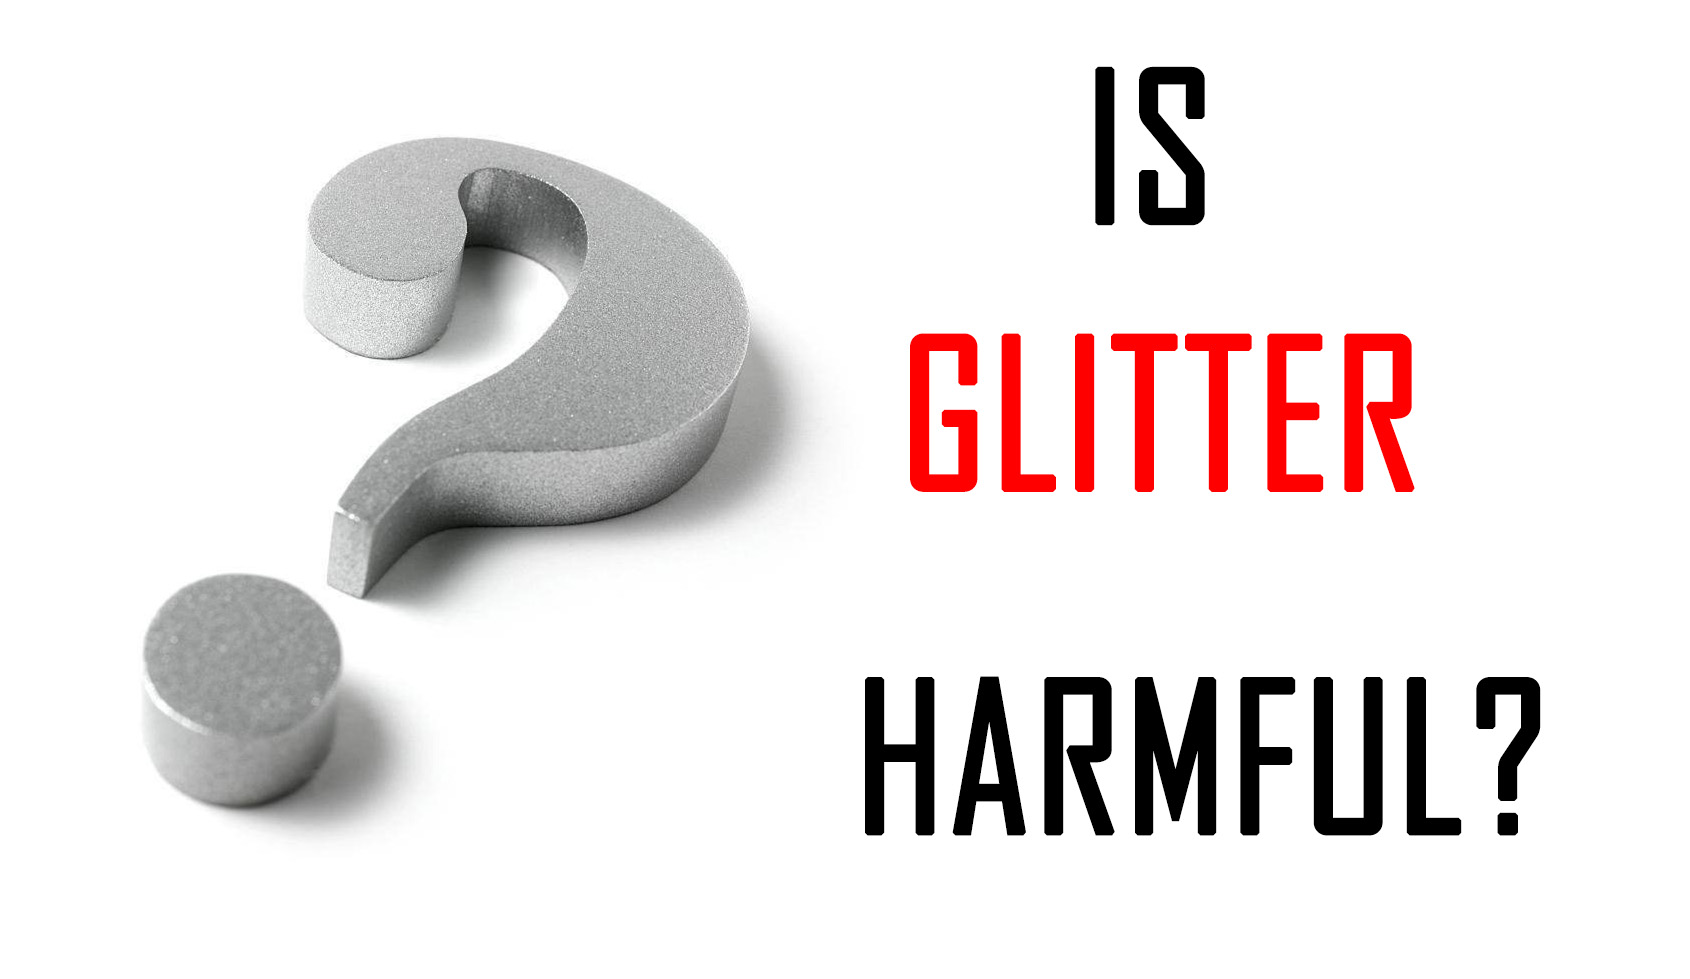 O pó de glitter é prejudicial ao corpo?